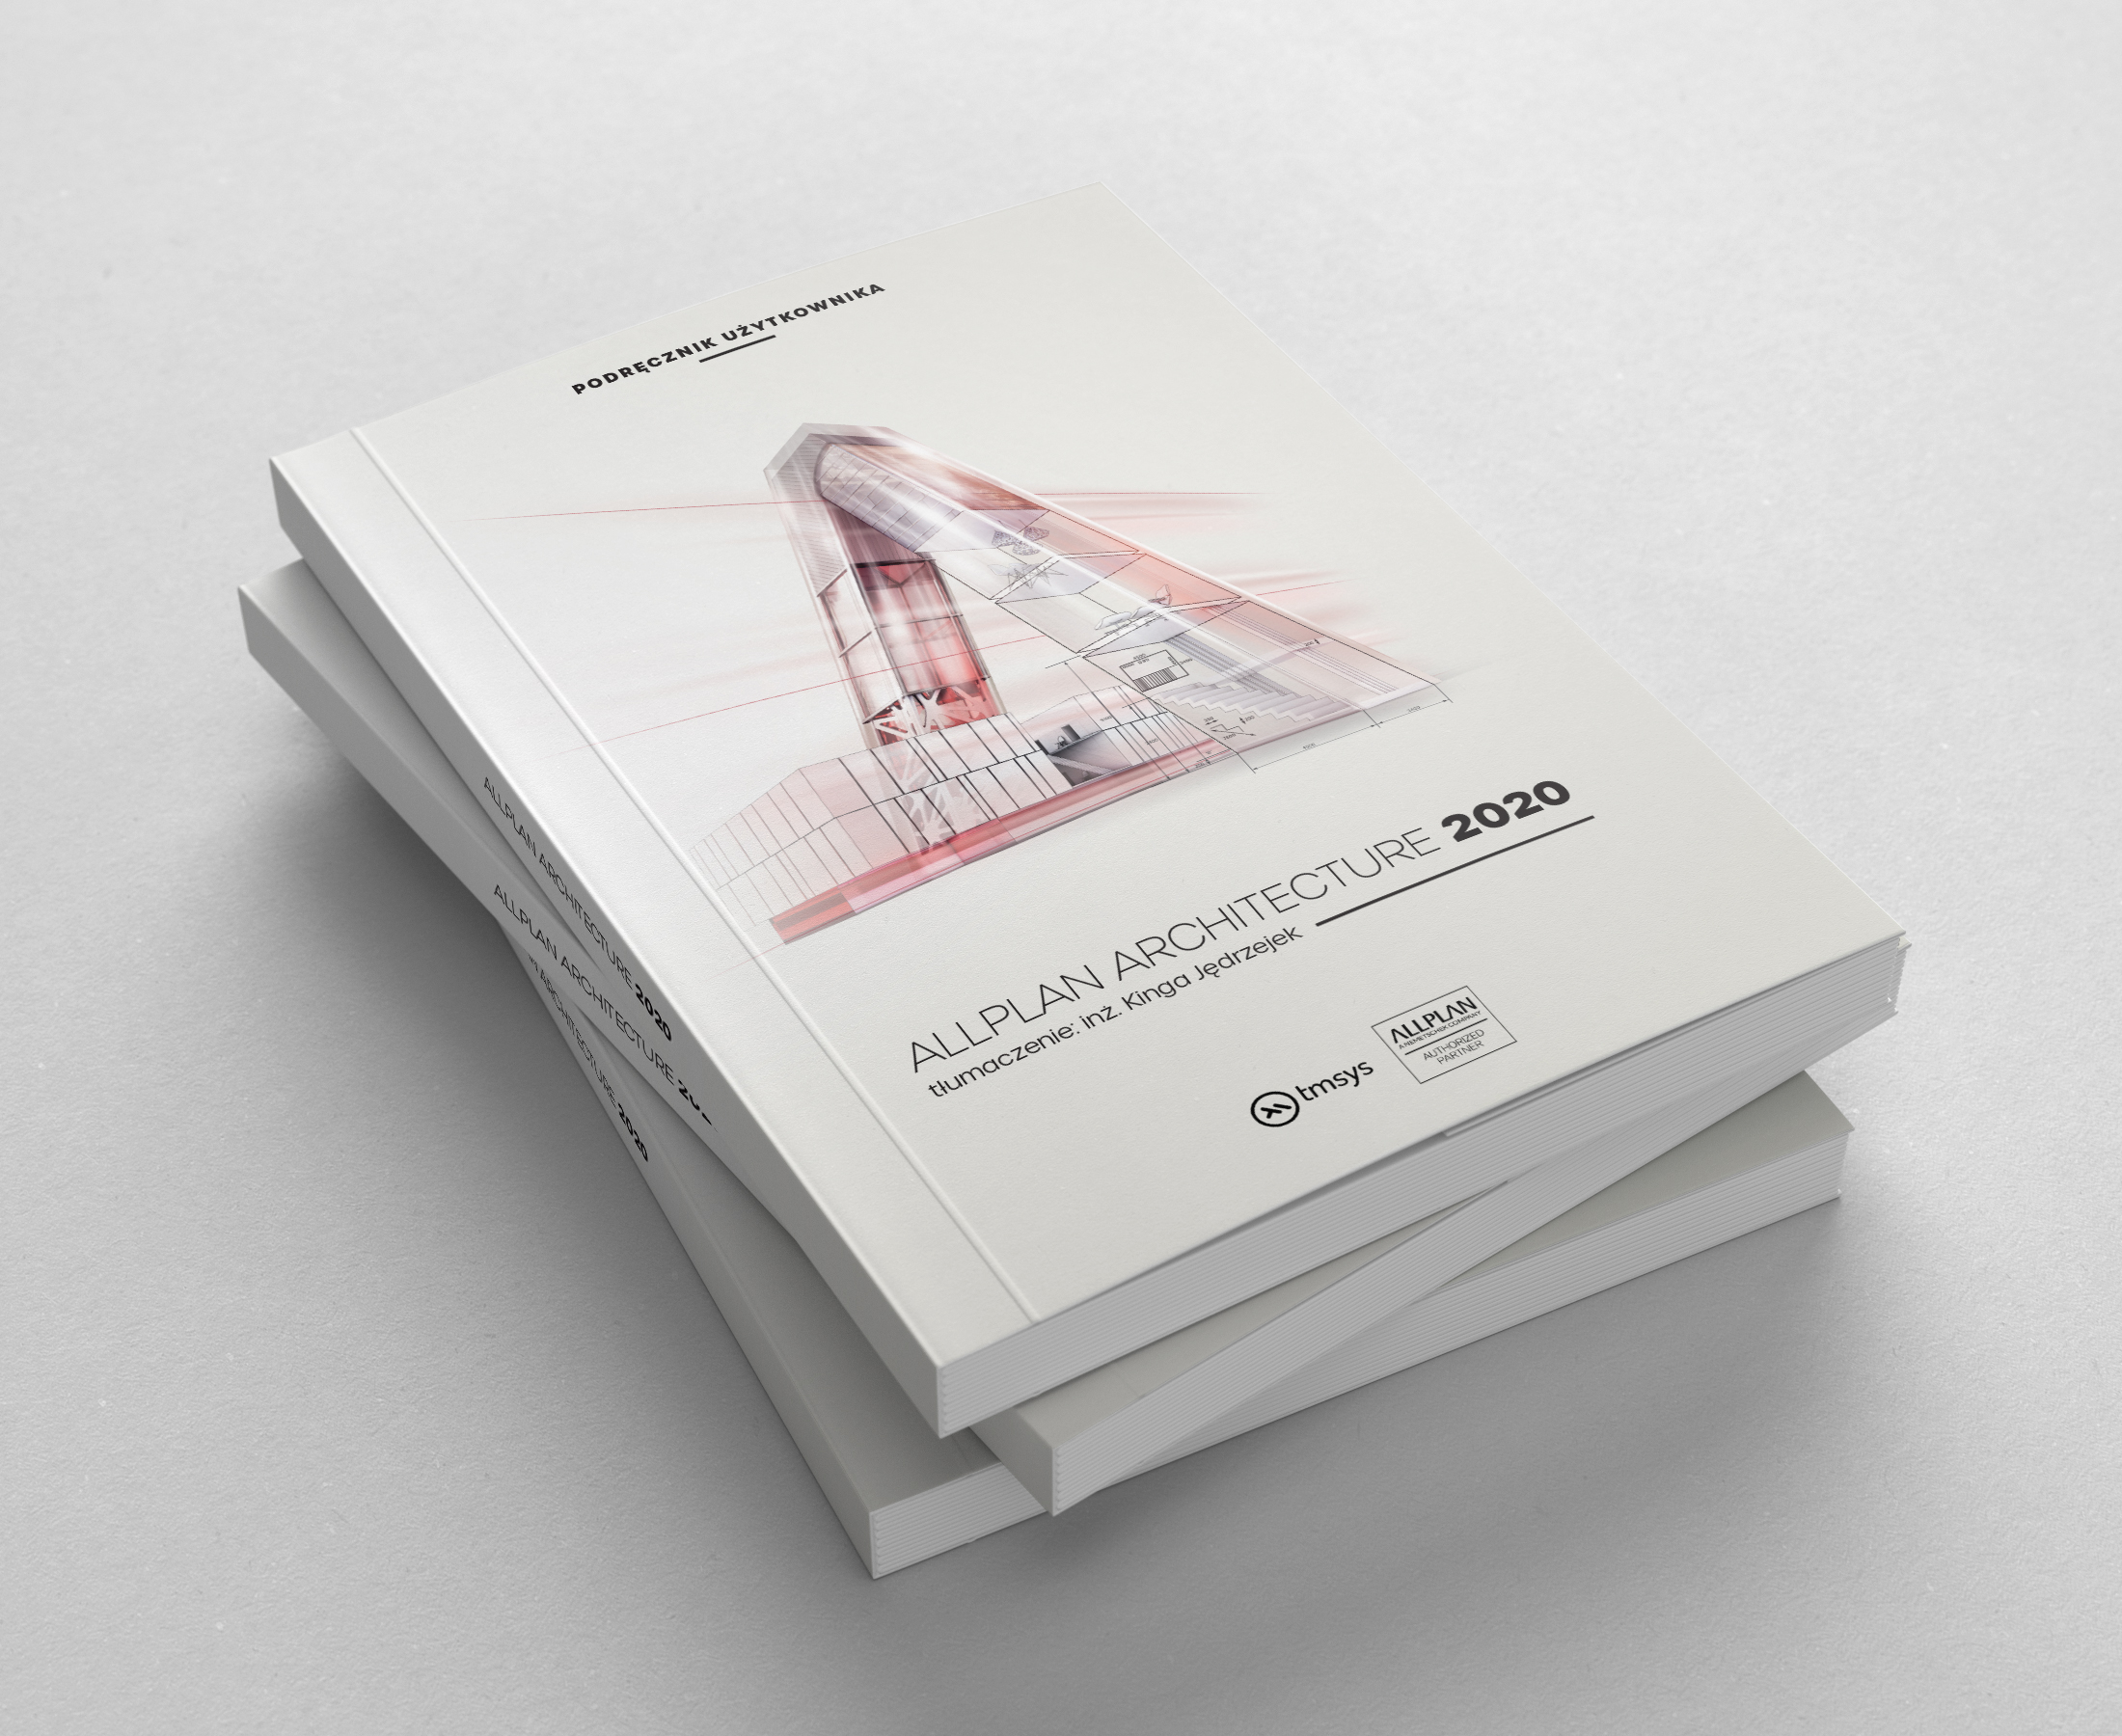 Podręcznik Allplan Architecture 2020 już jest!